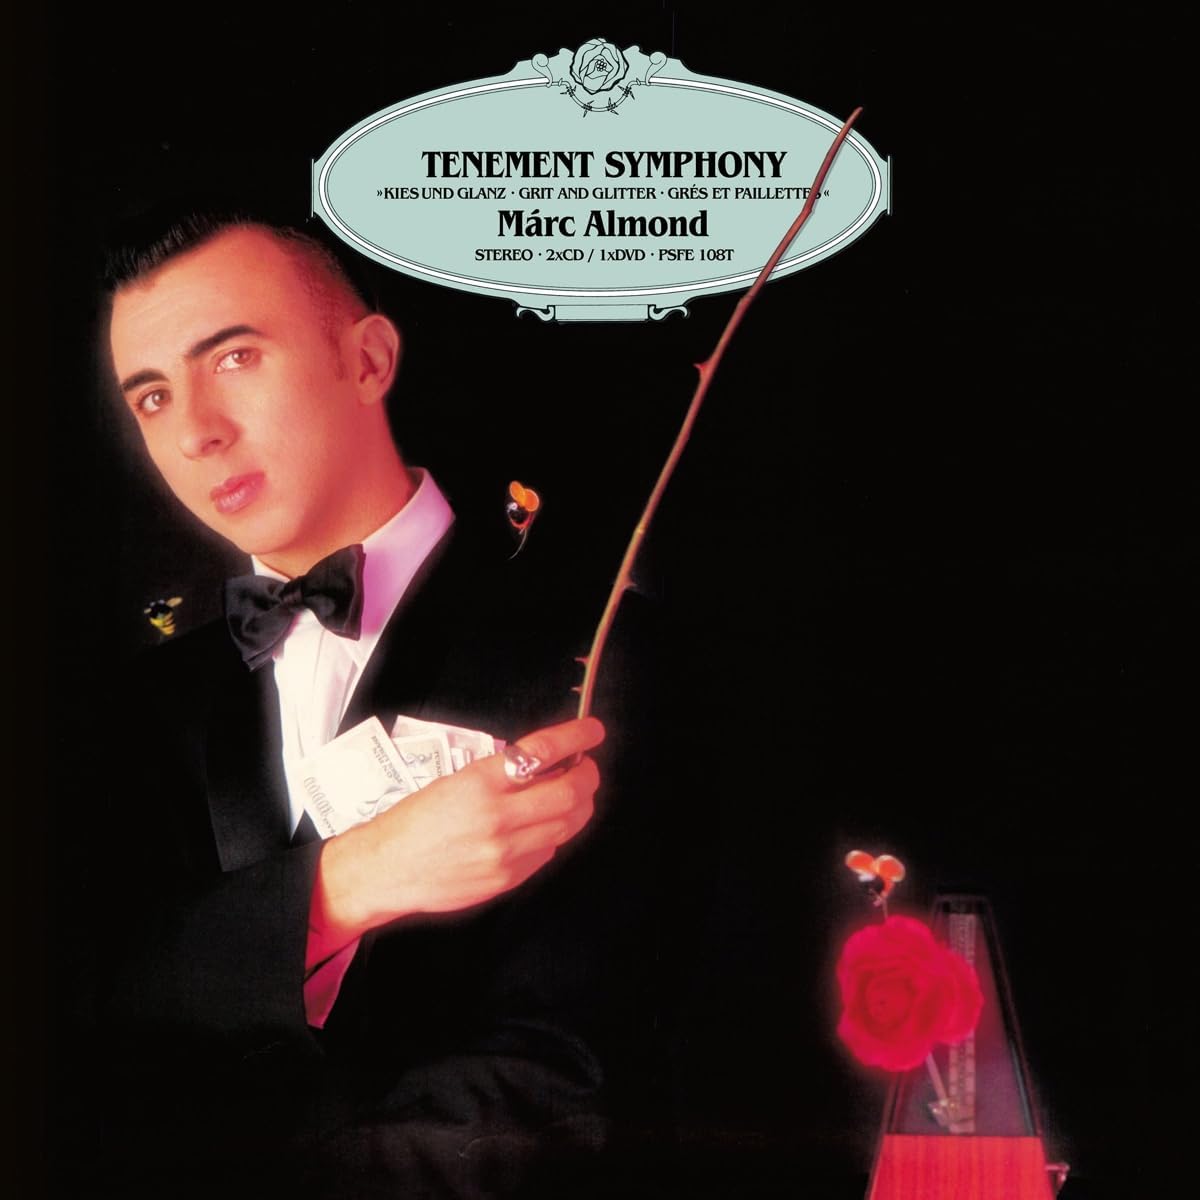 Marc Almond / Tenement Symphony 6CD+DVD reissue